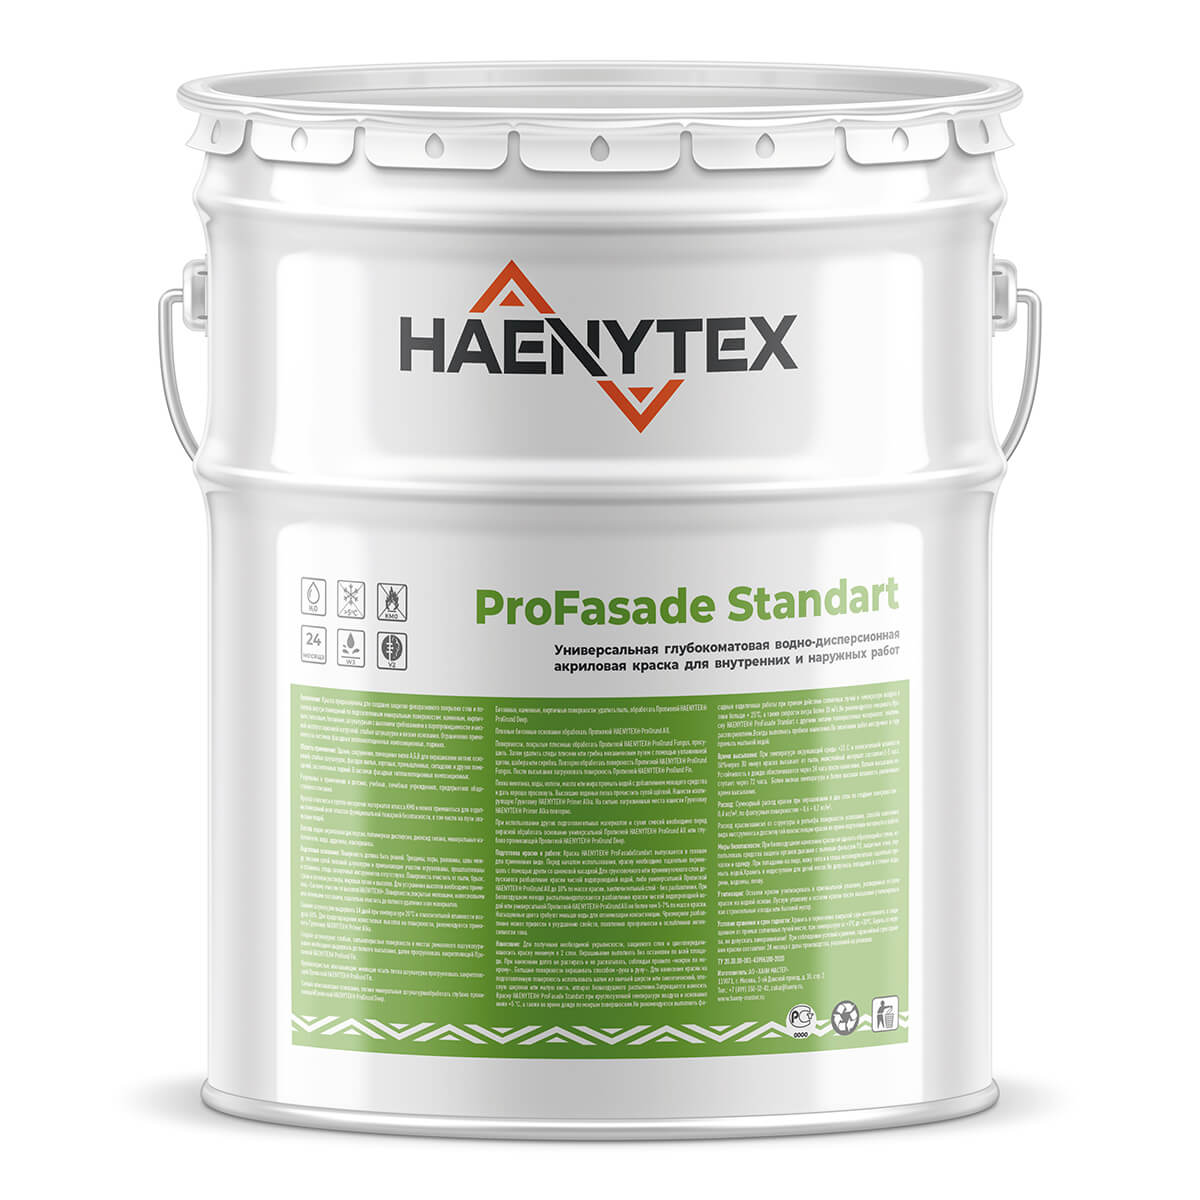 HAENYTEX® ProFasade Standart